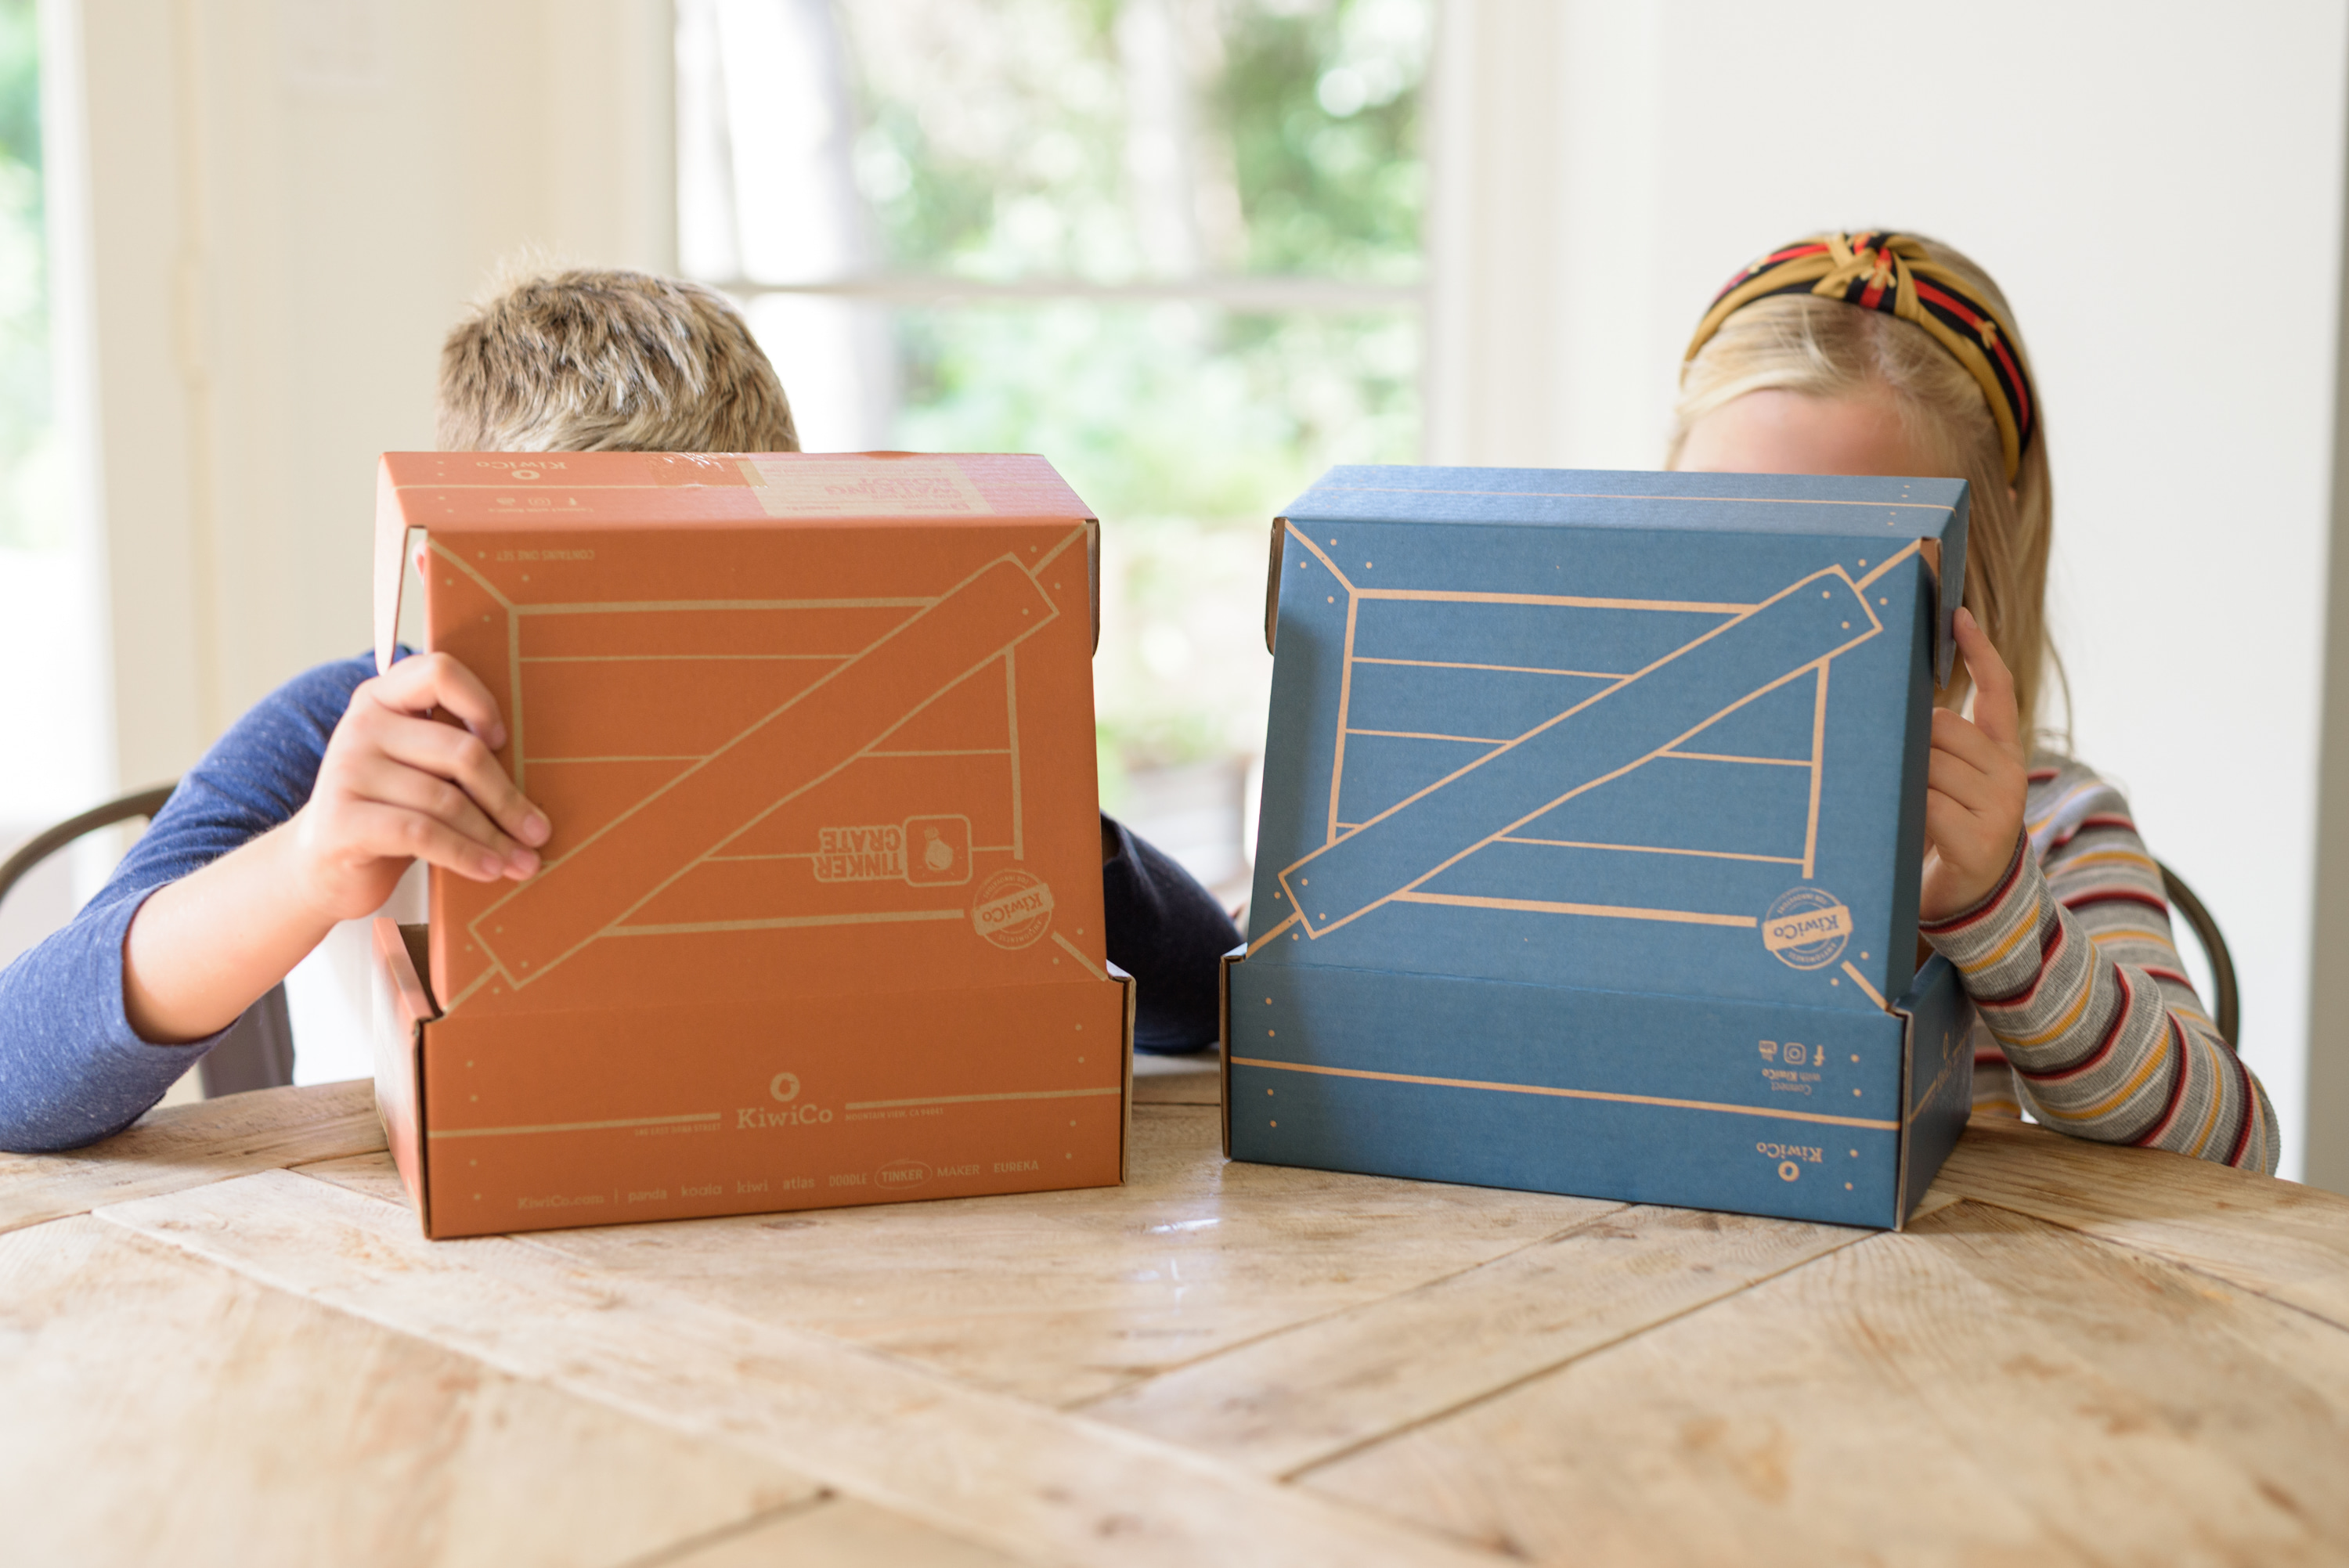 Kiwico Reviews by popular Houston lifestyle blog, Fancy Ashley: image of two kids looking at Kiwico boxes. 